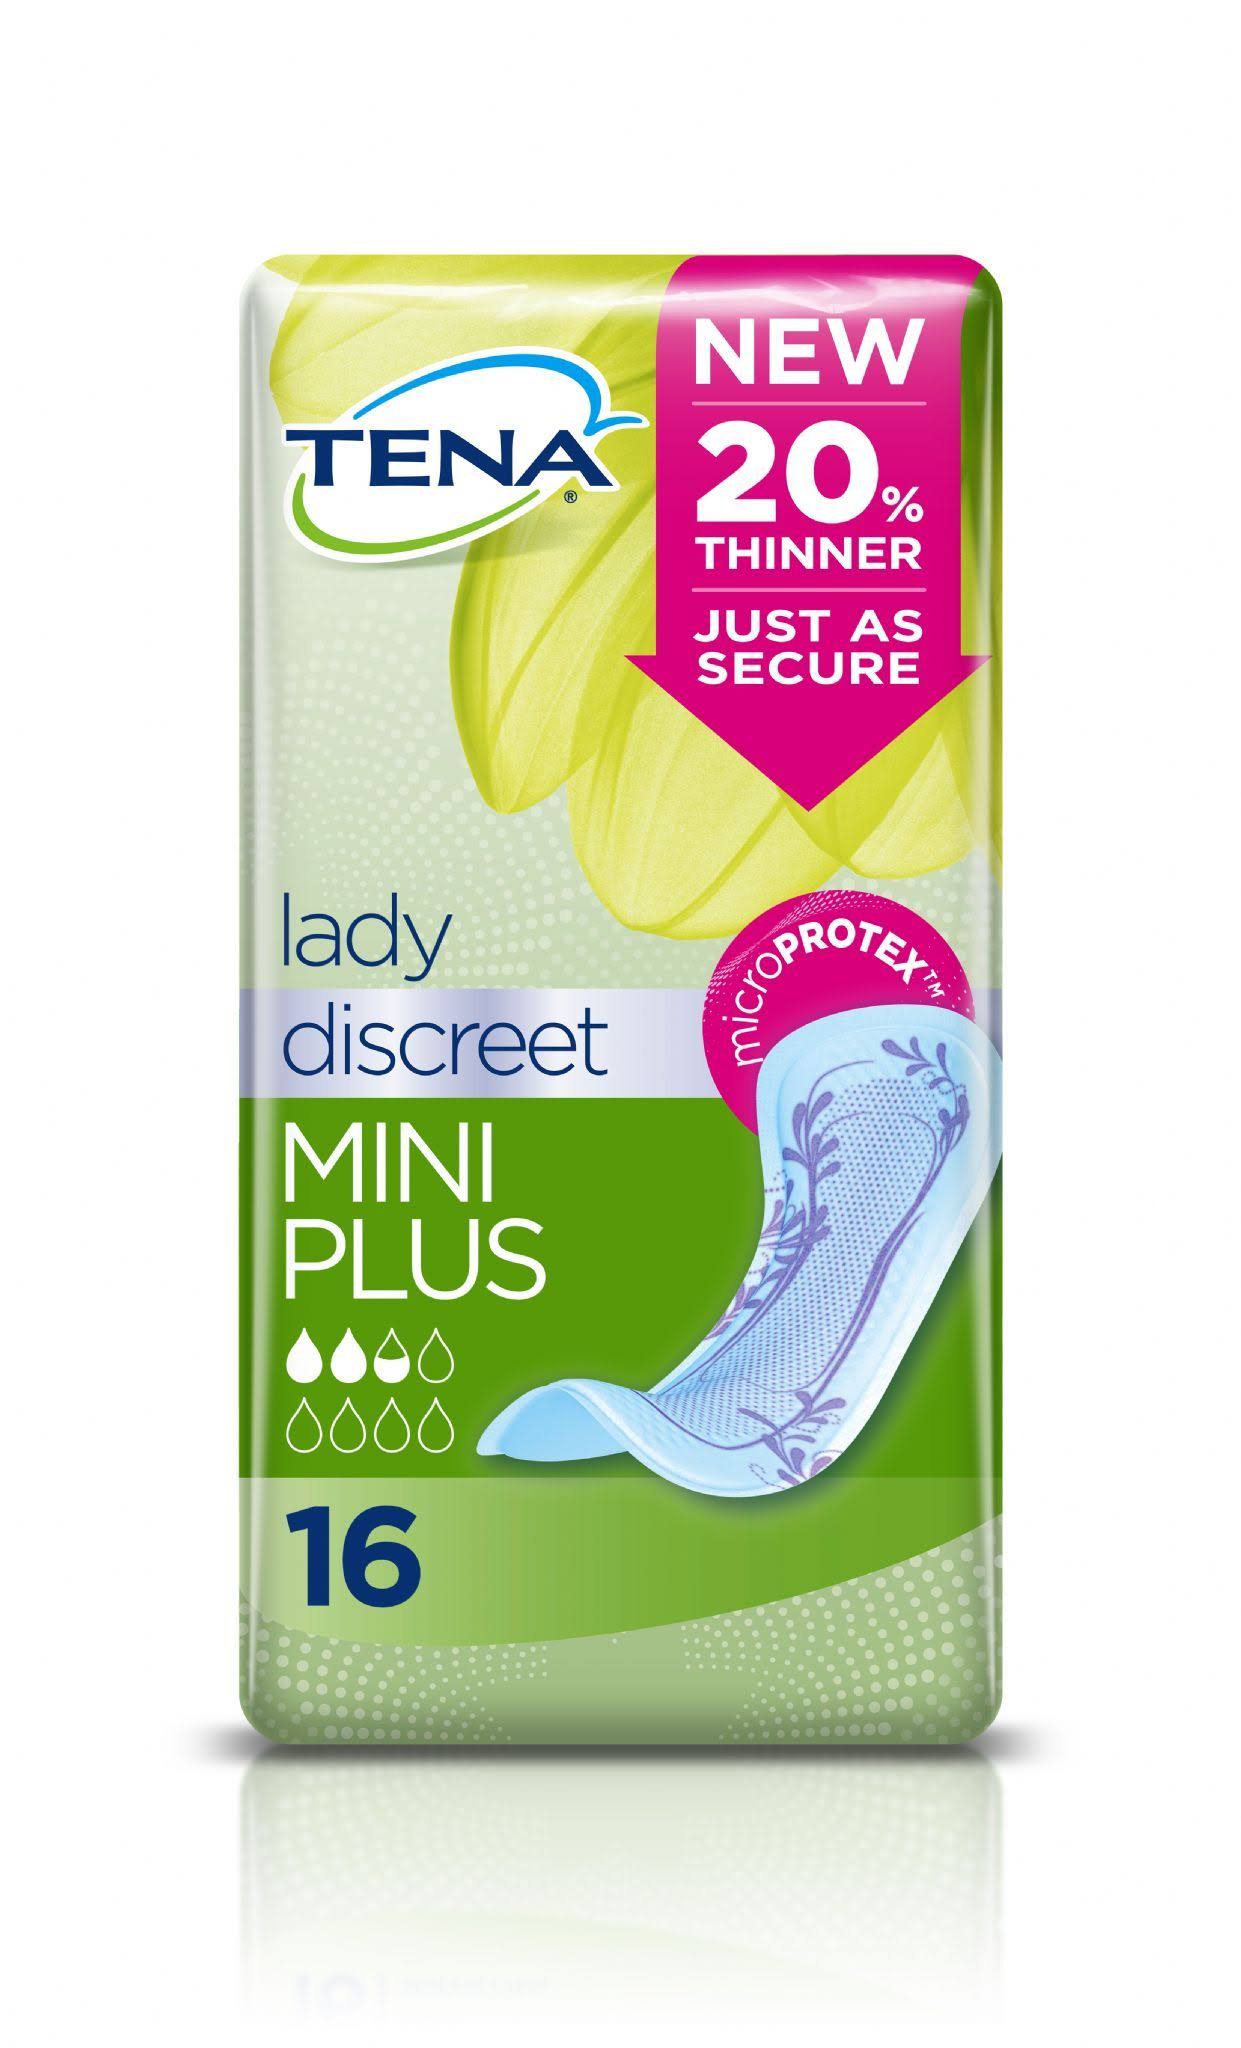 Tena Lady Discreet Mini Plus Pads - 16pk